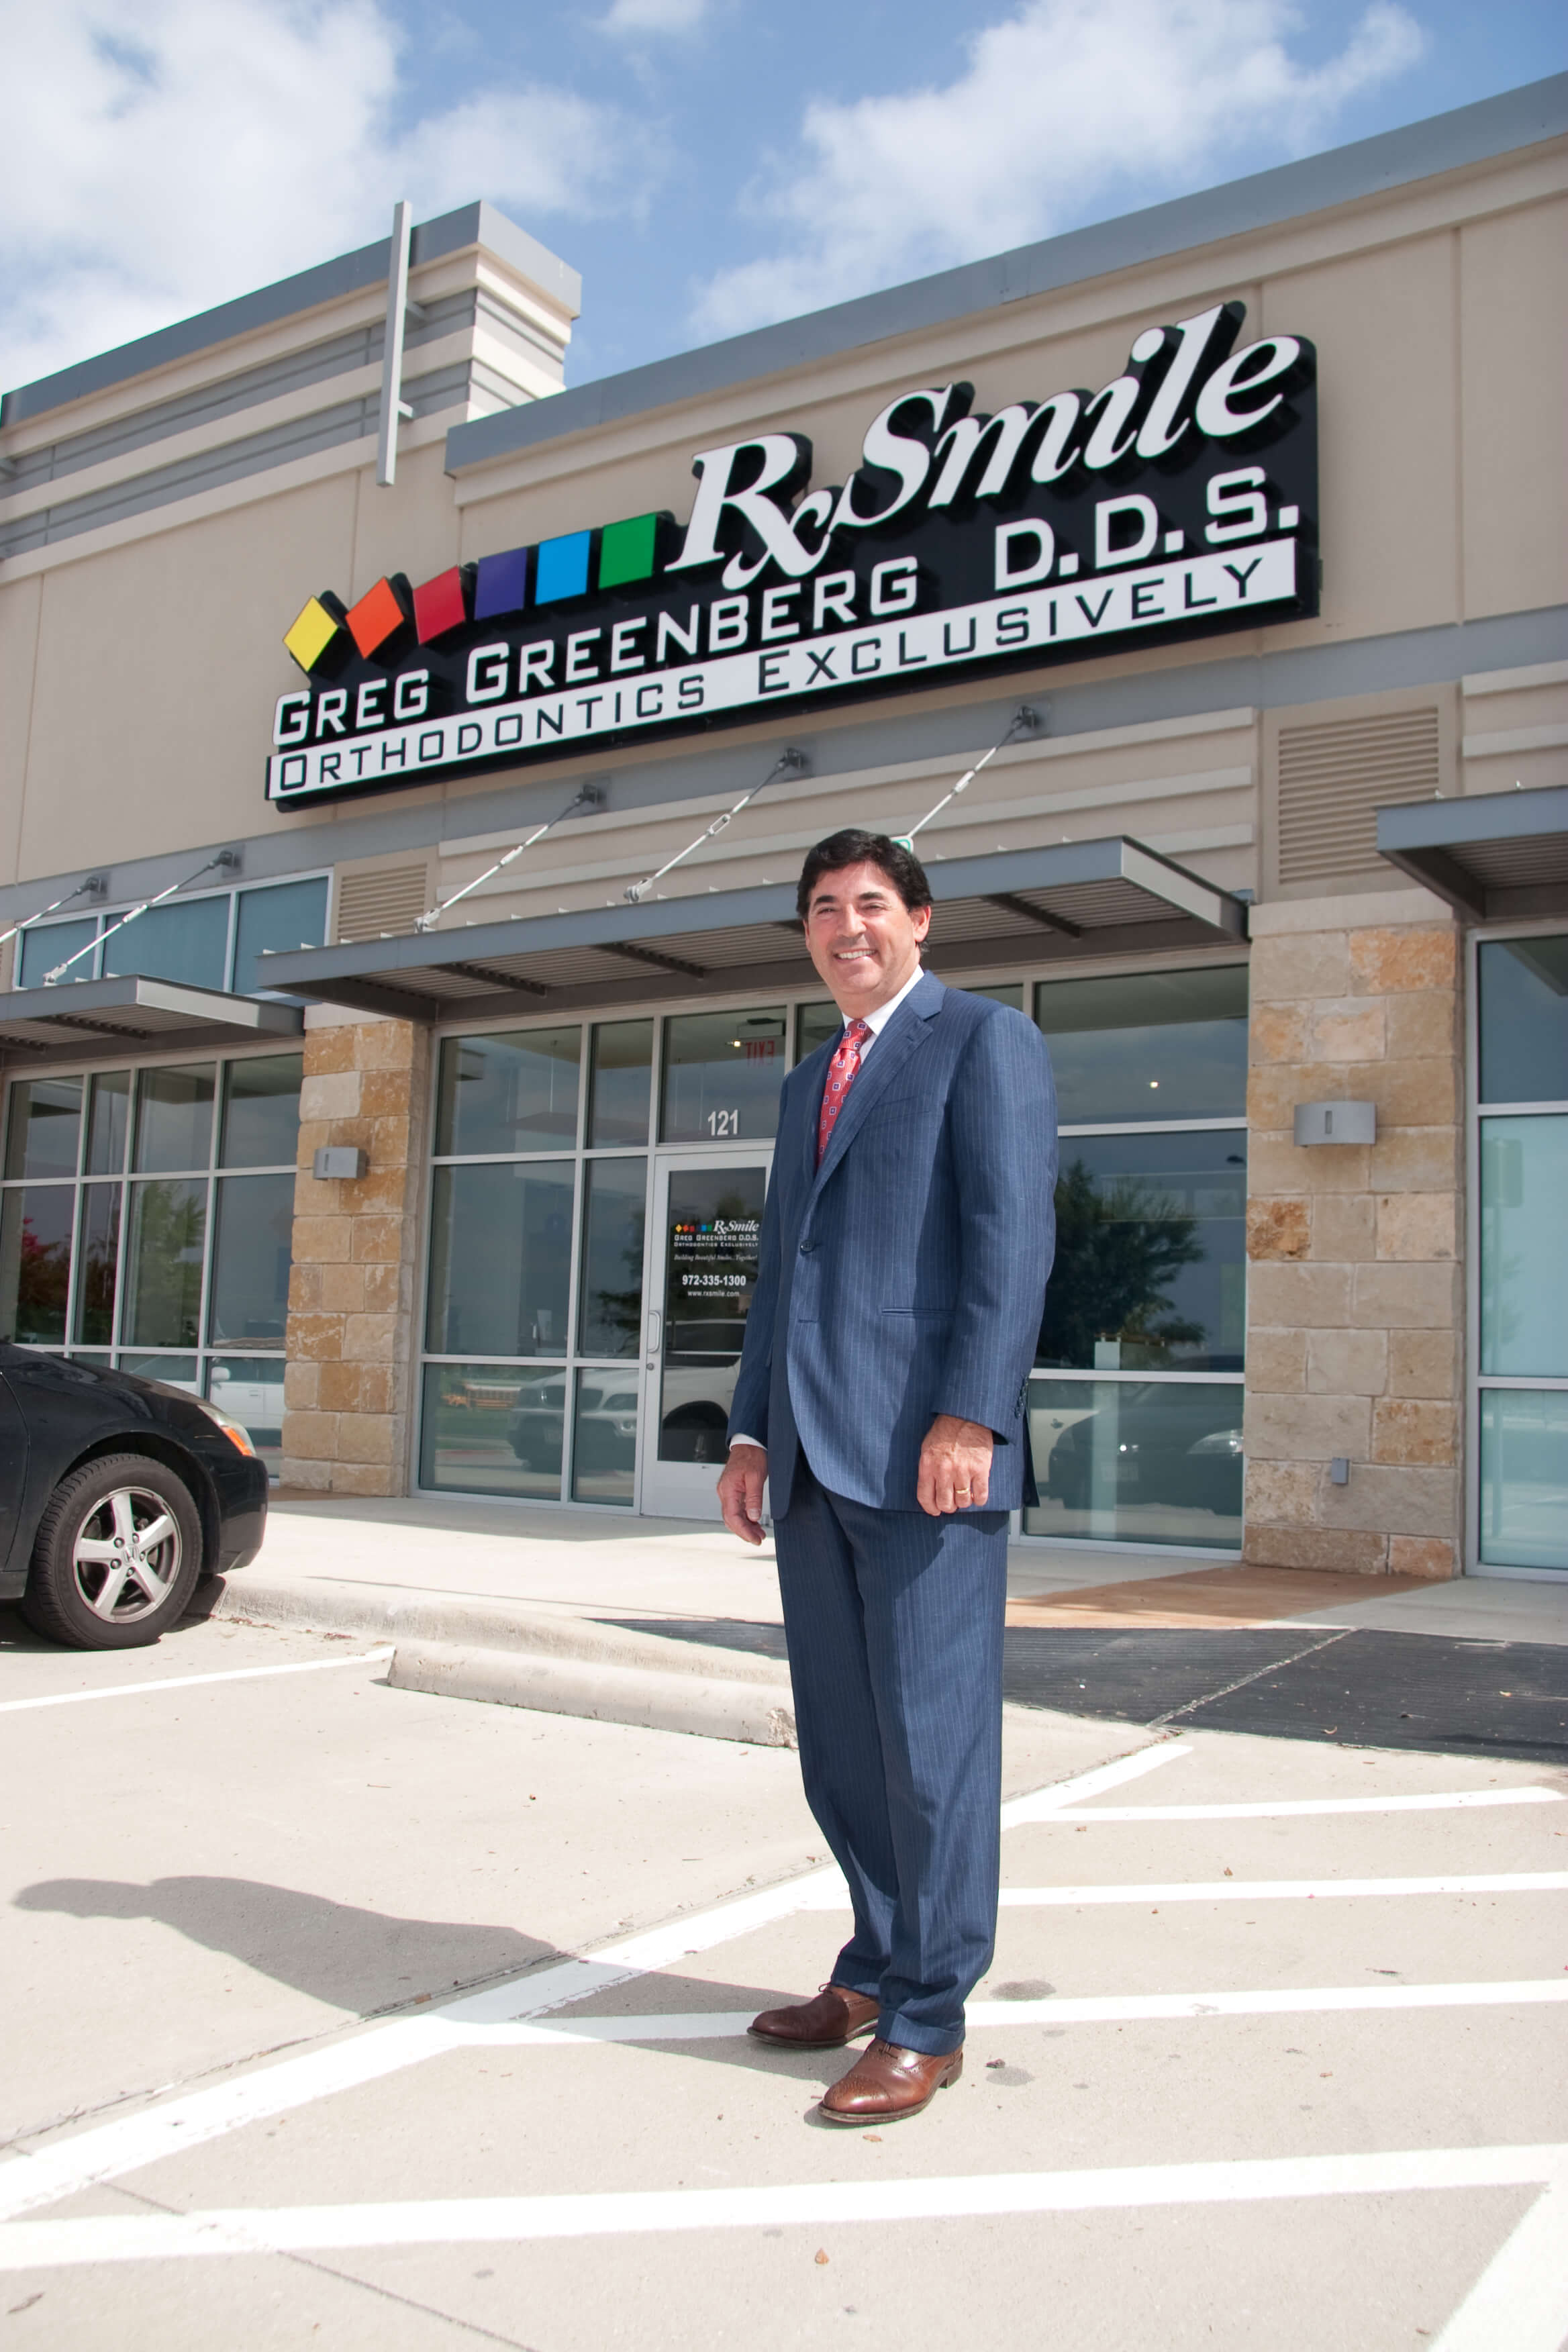 Rxsmile Orthodontics Greg Greenberg DDS